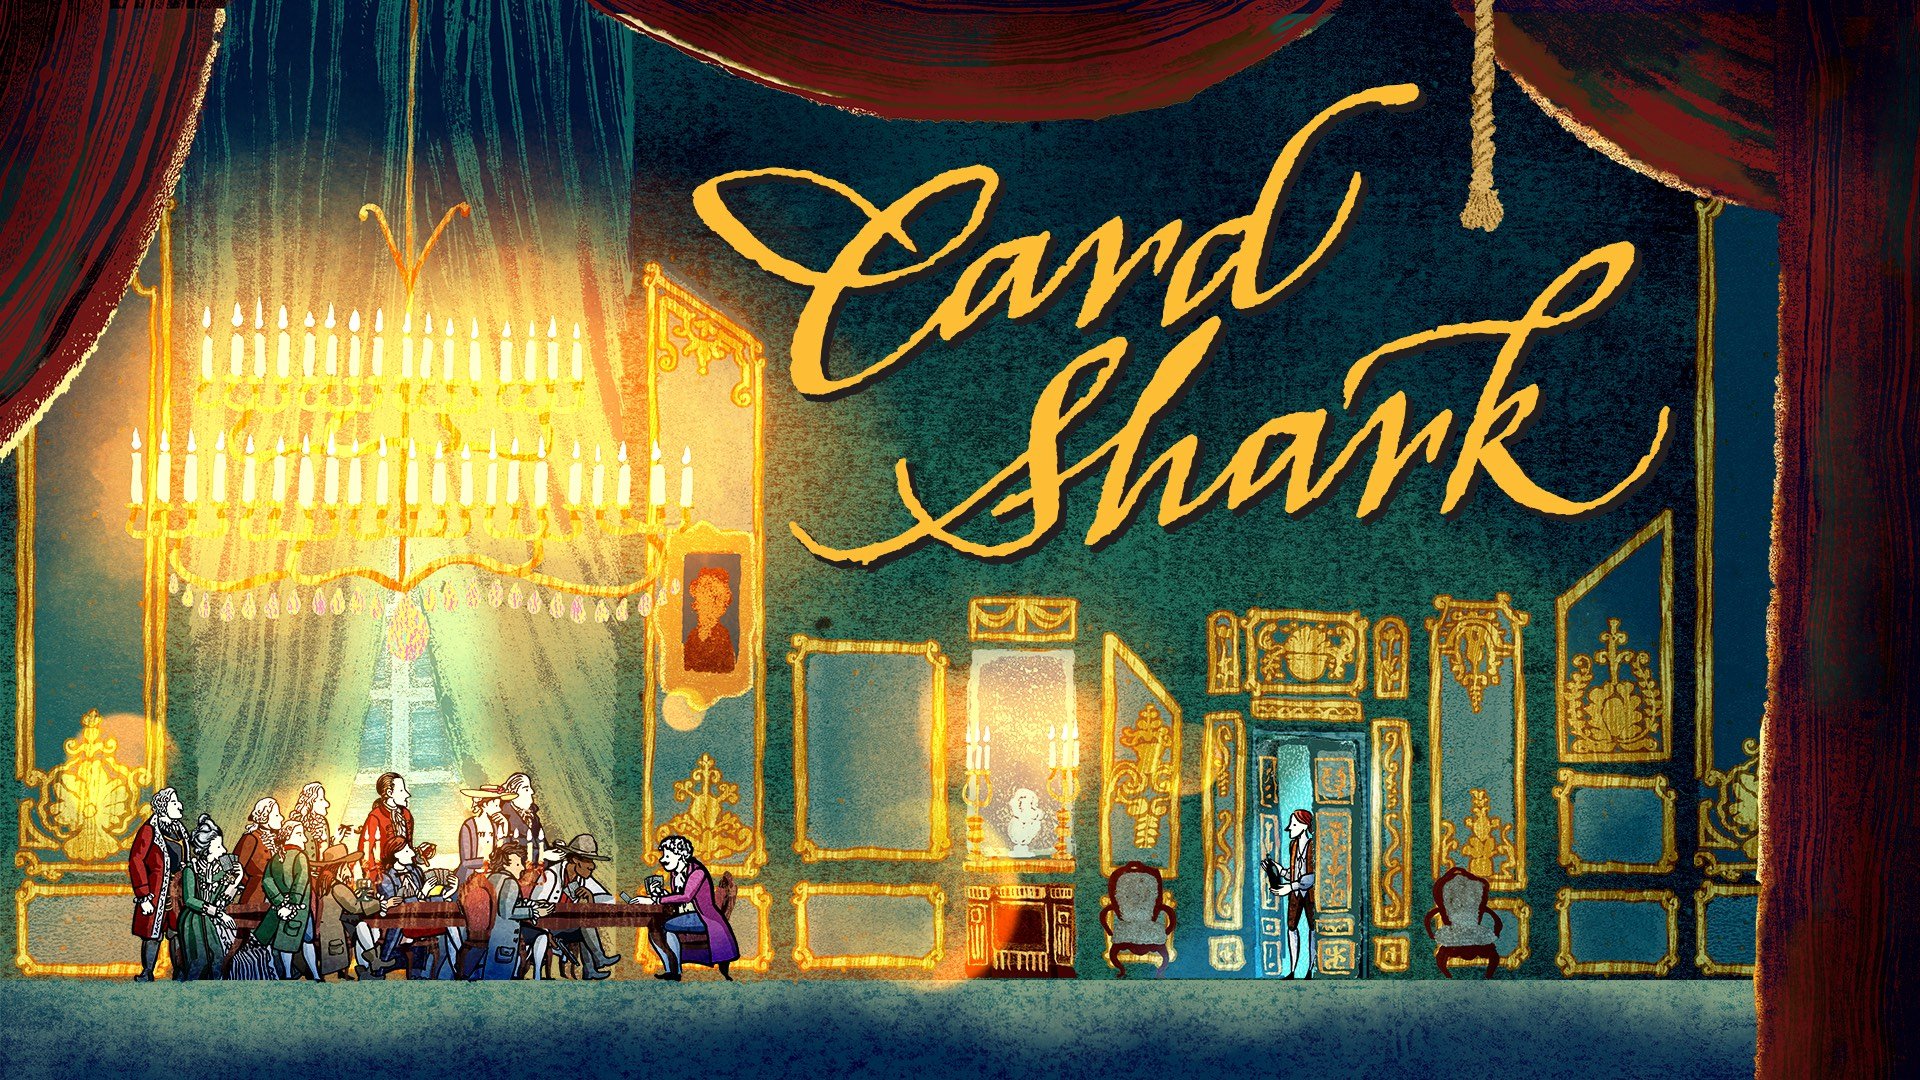 Video: Card Shark launch trailer